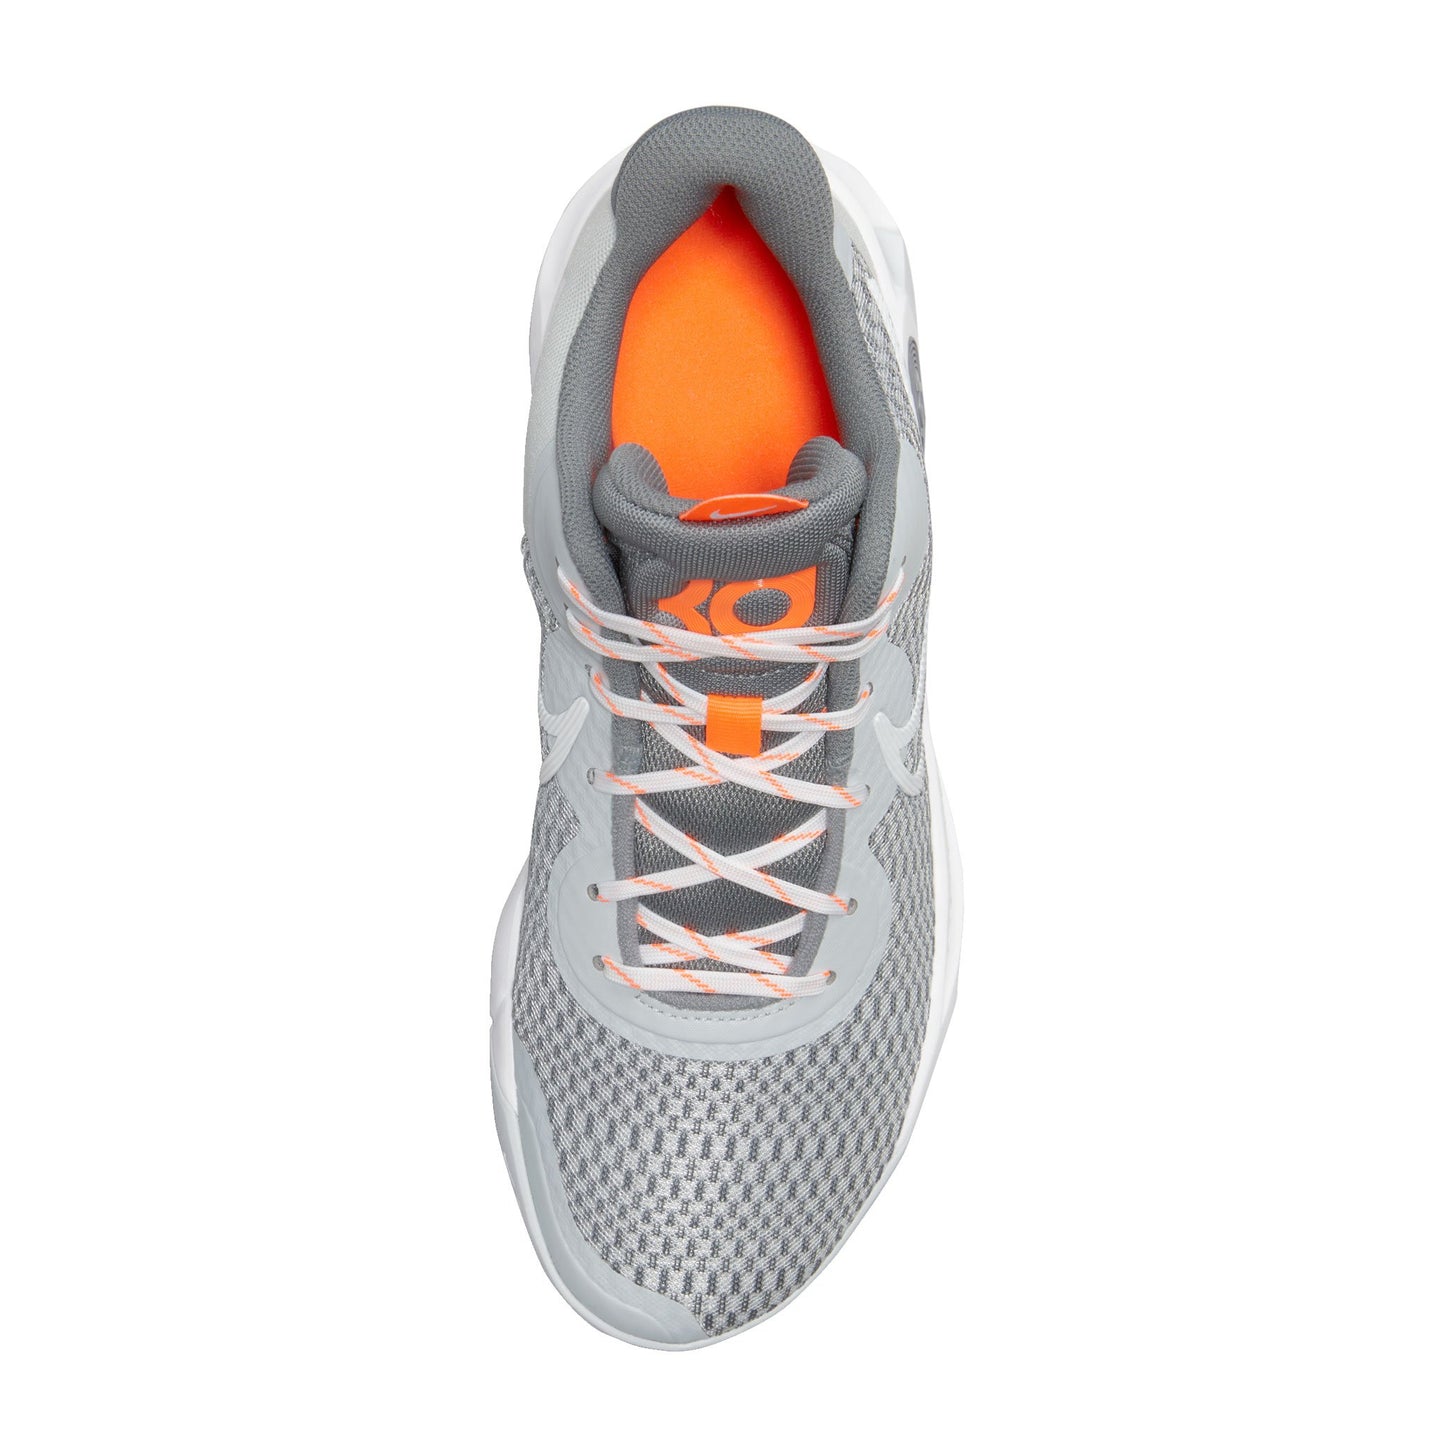 Tenis Nike KD Trey 5 IX Pure Platinum